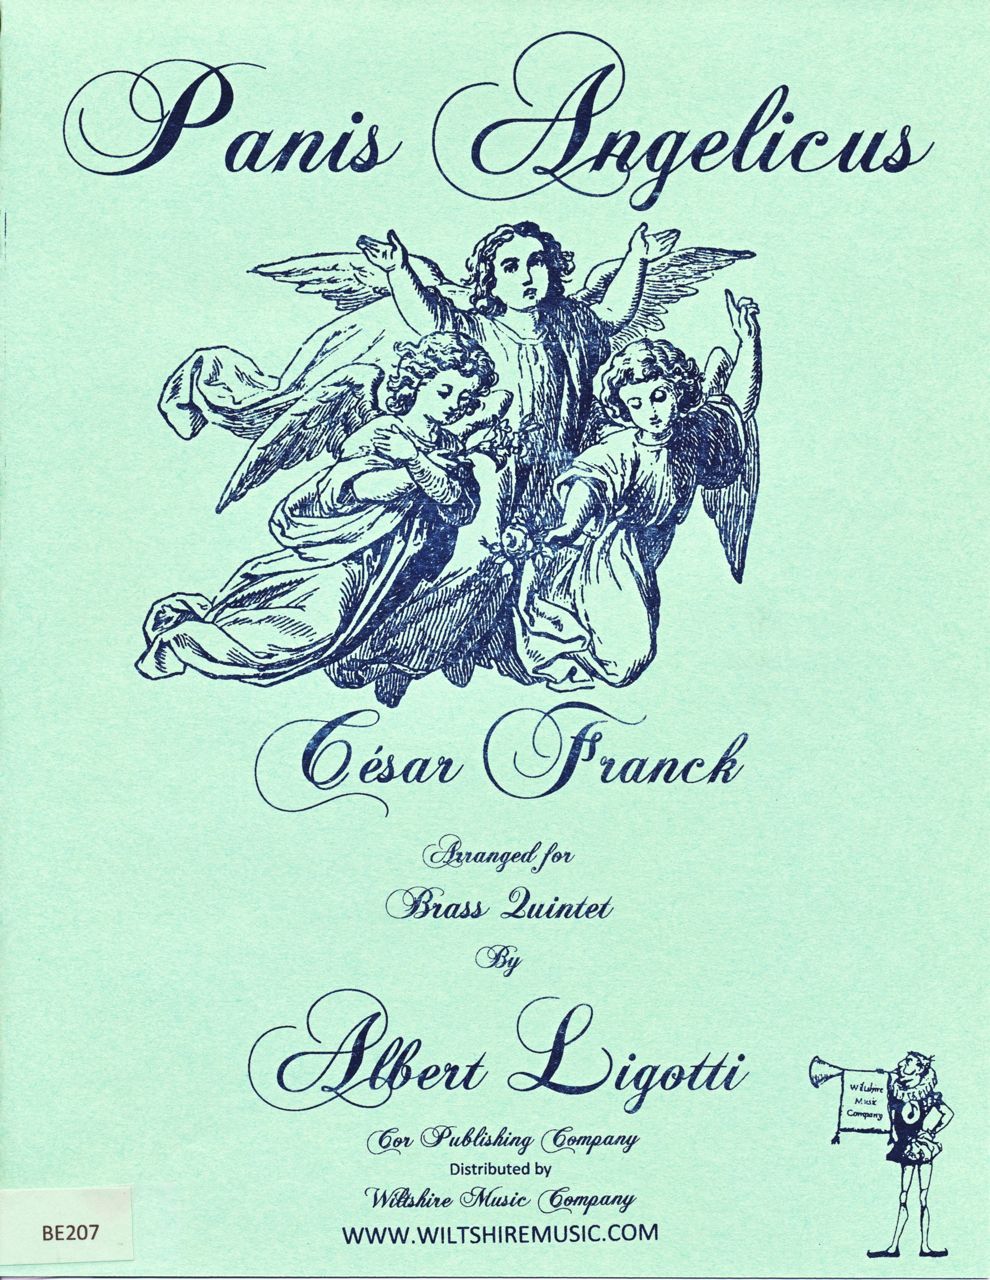 Panis Angelicus, Cesar Franck arr. A. Ligotti